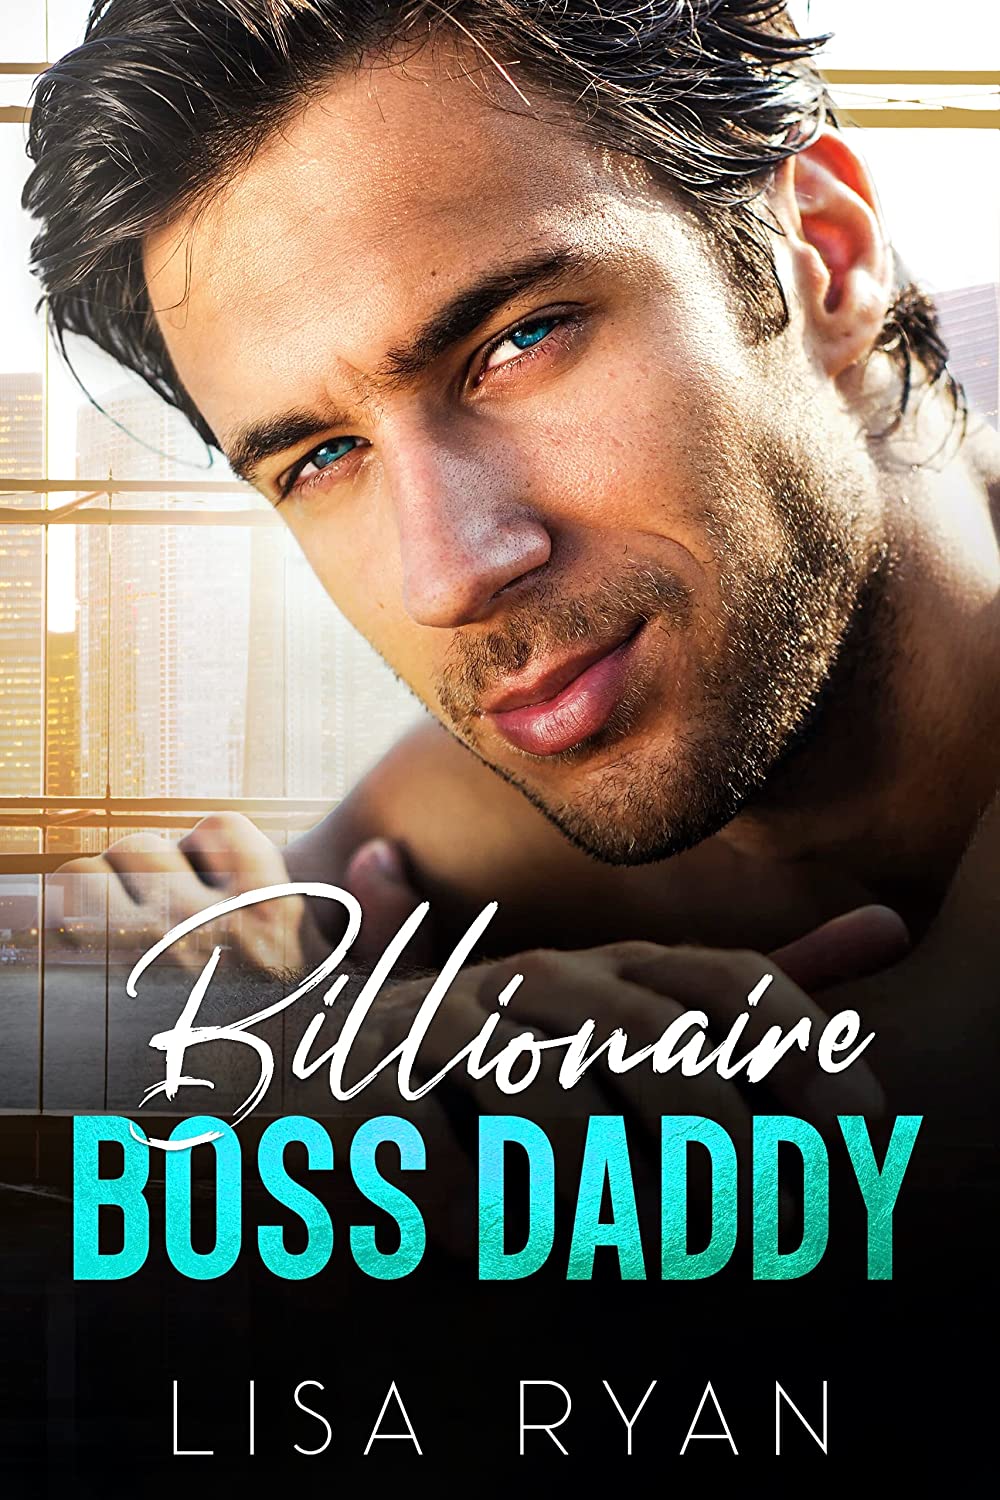 Billionaire Boss Daddy by Lisa Ryan PDF Download Audio Book